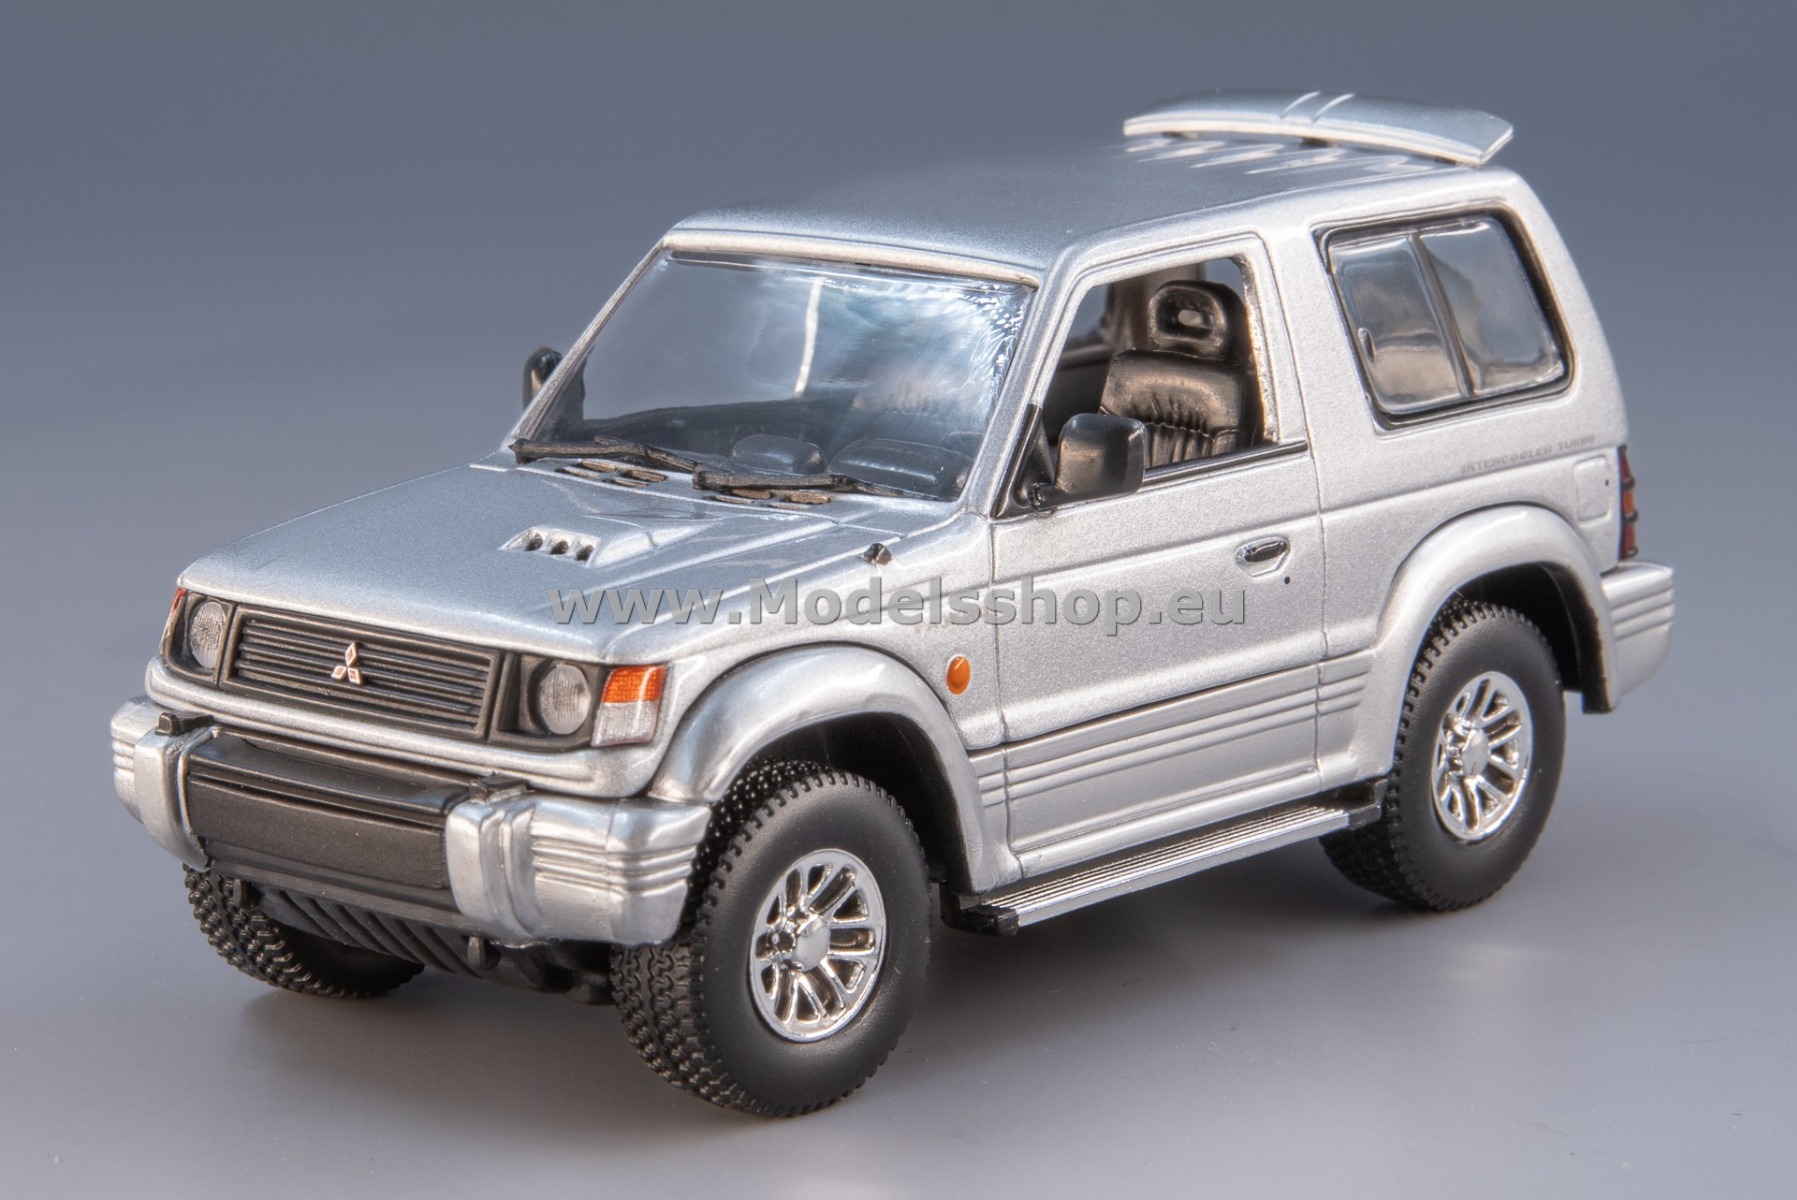 Maxichamps 940163371 Mitsubishi Pajero SWB, 1991 /silver/